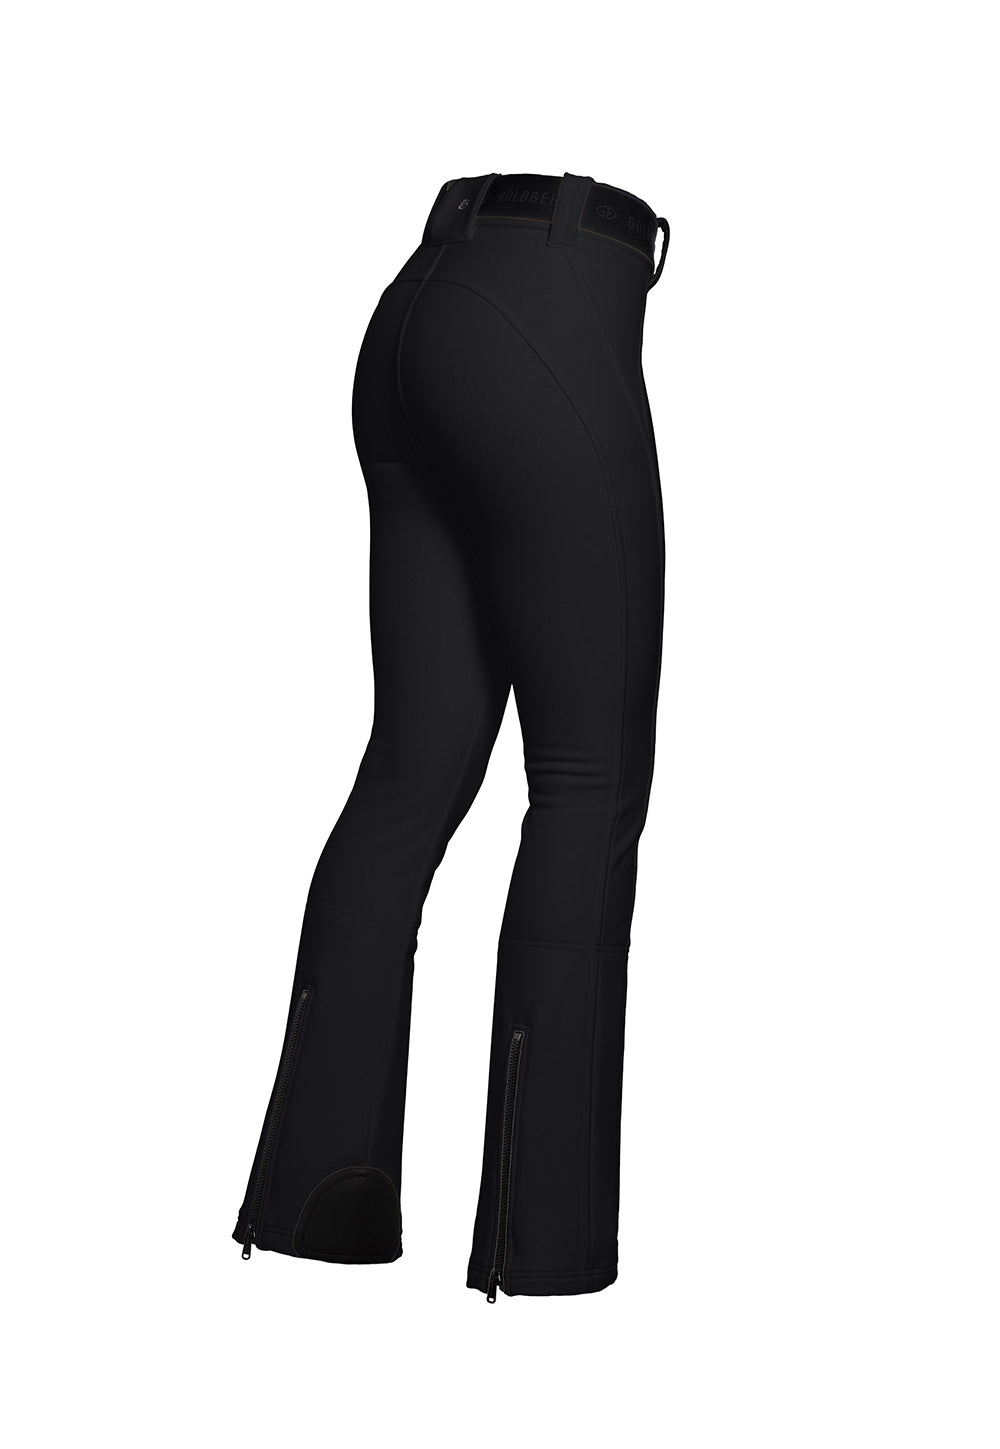 Pippa Ski Pants - Black sold by Angel Divine